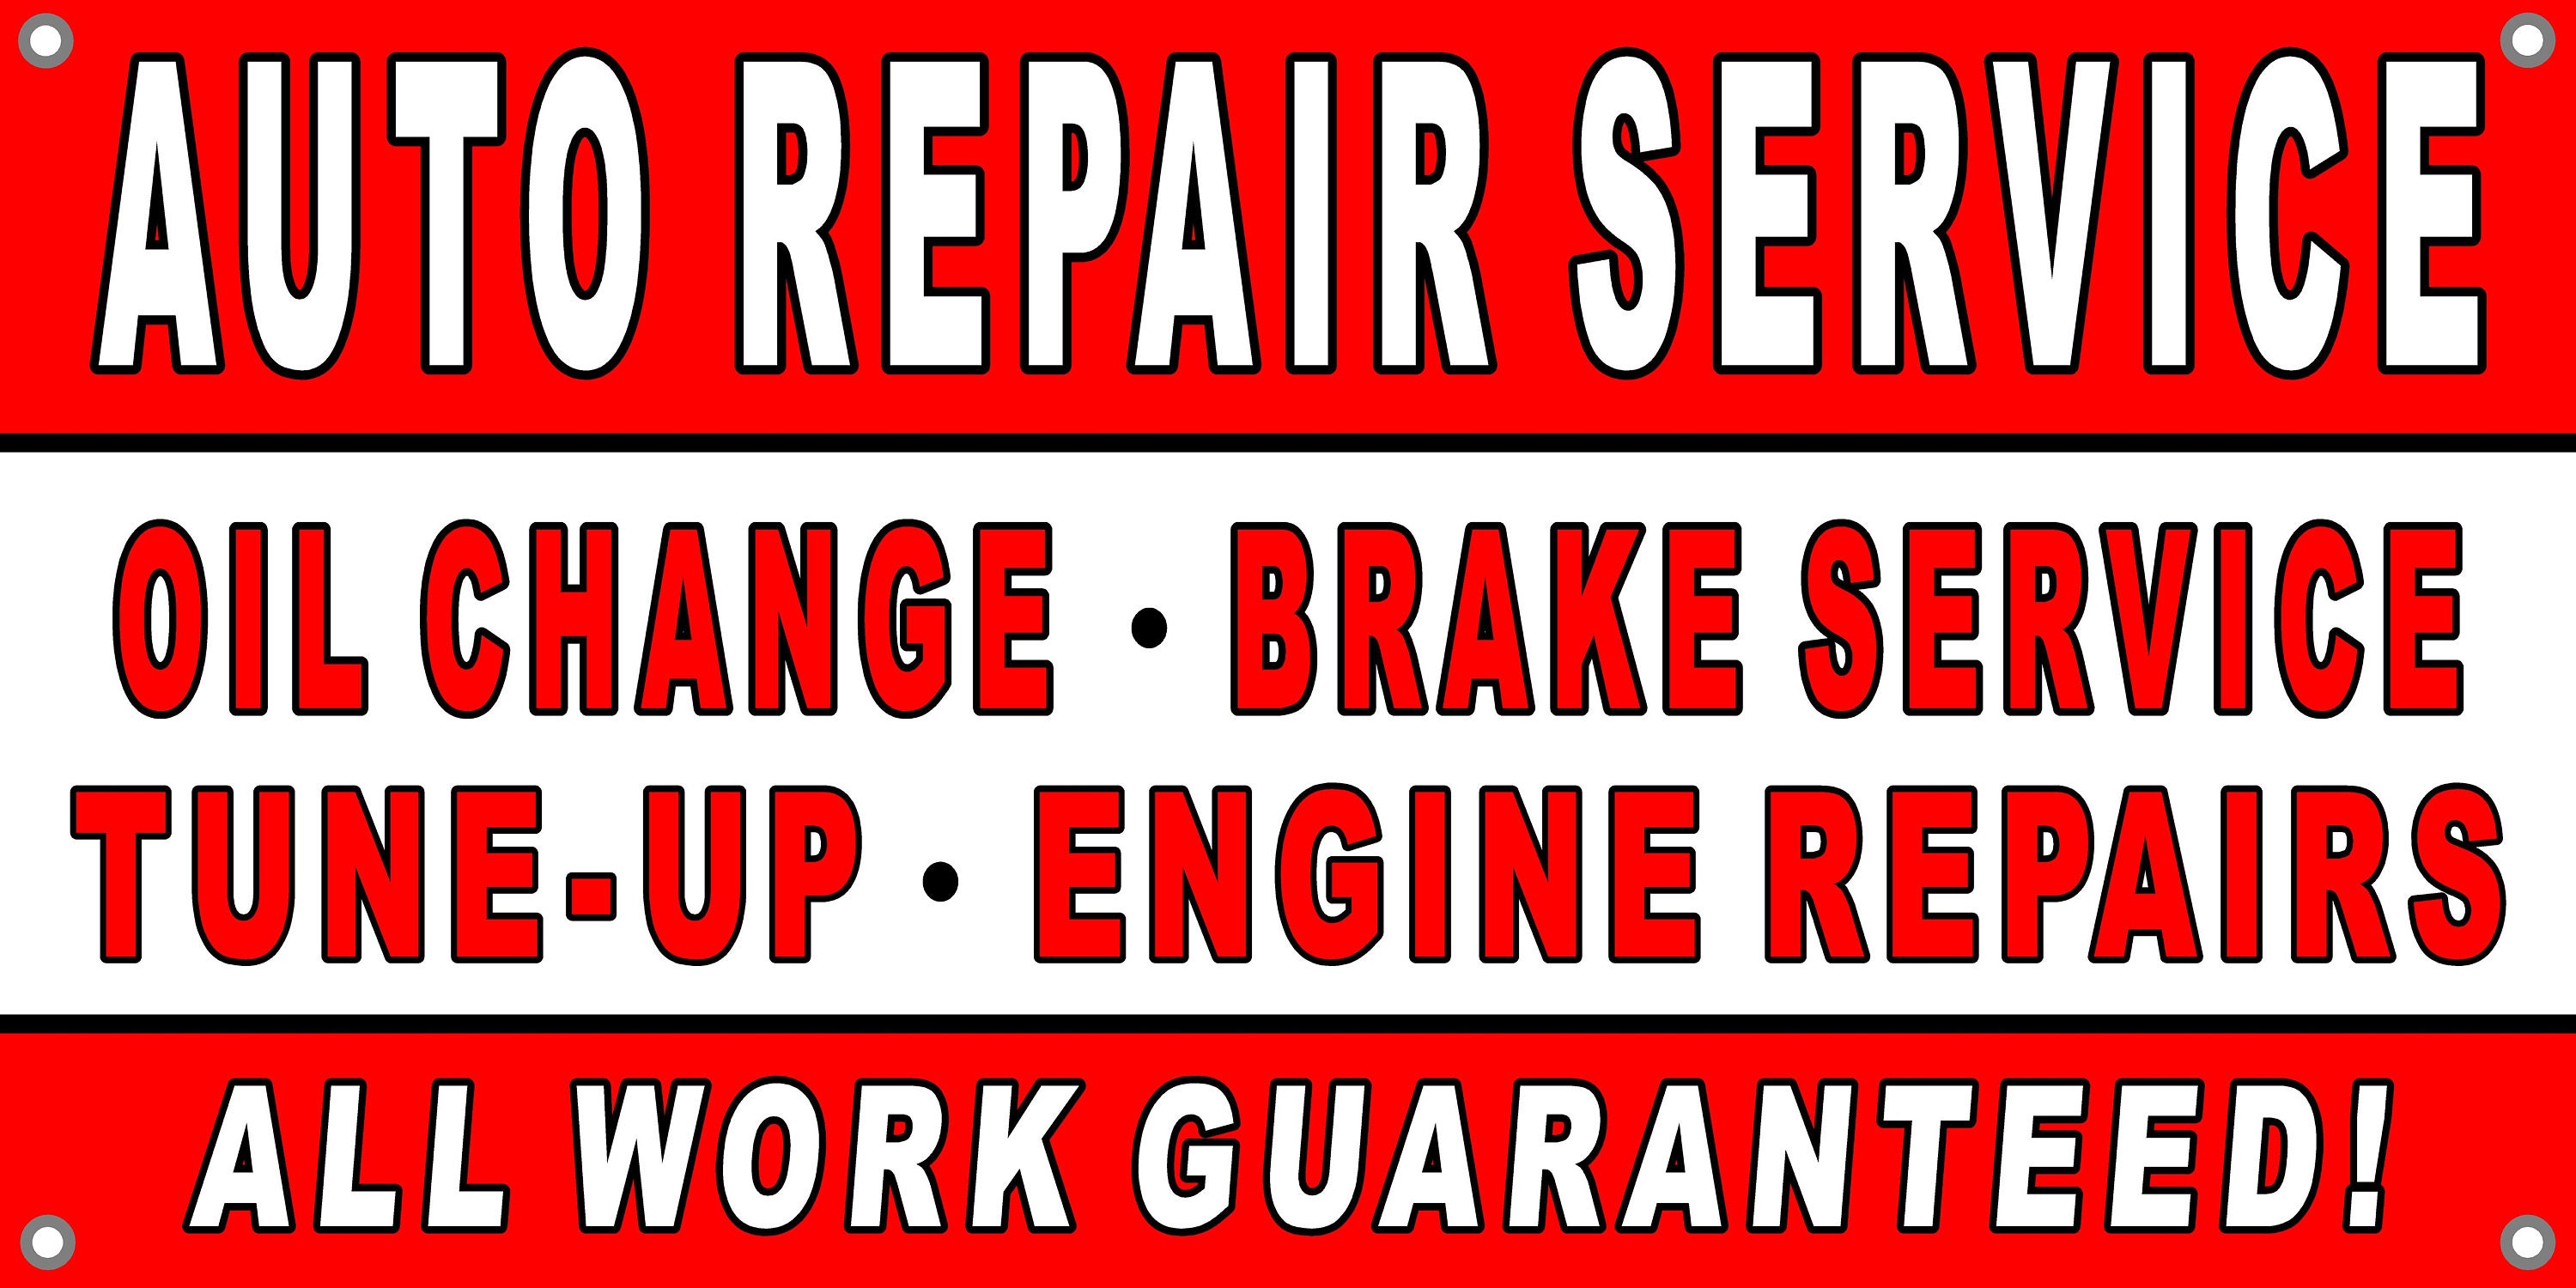 Auto Repair Service Vinyl Banner Sign - Il Fullxfull.2170433292 4opa